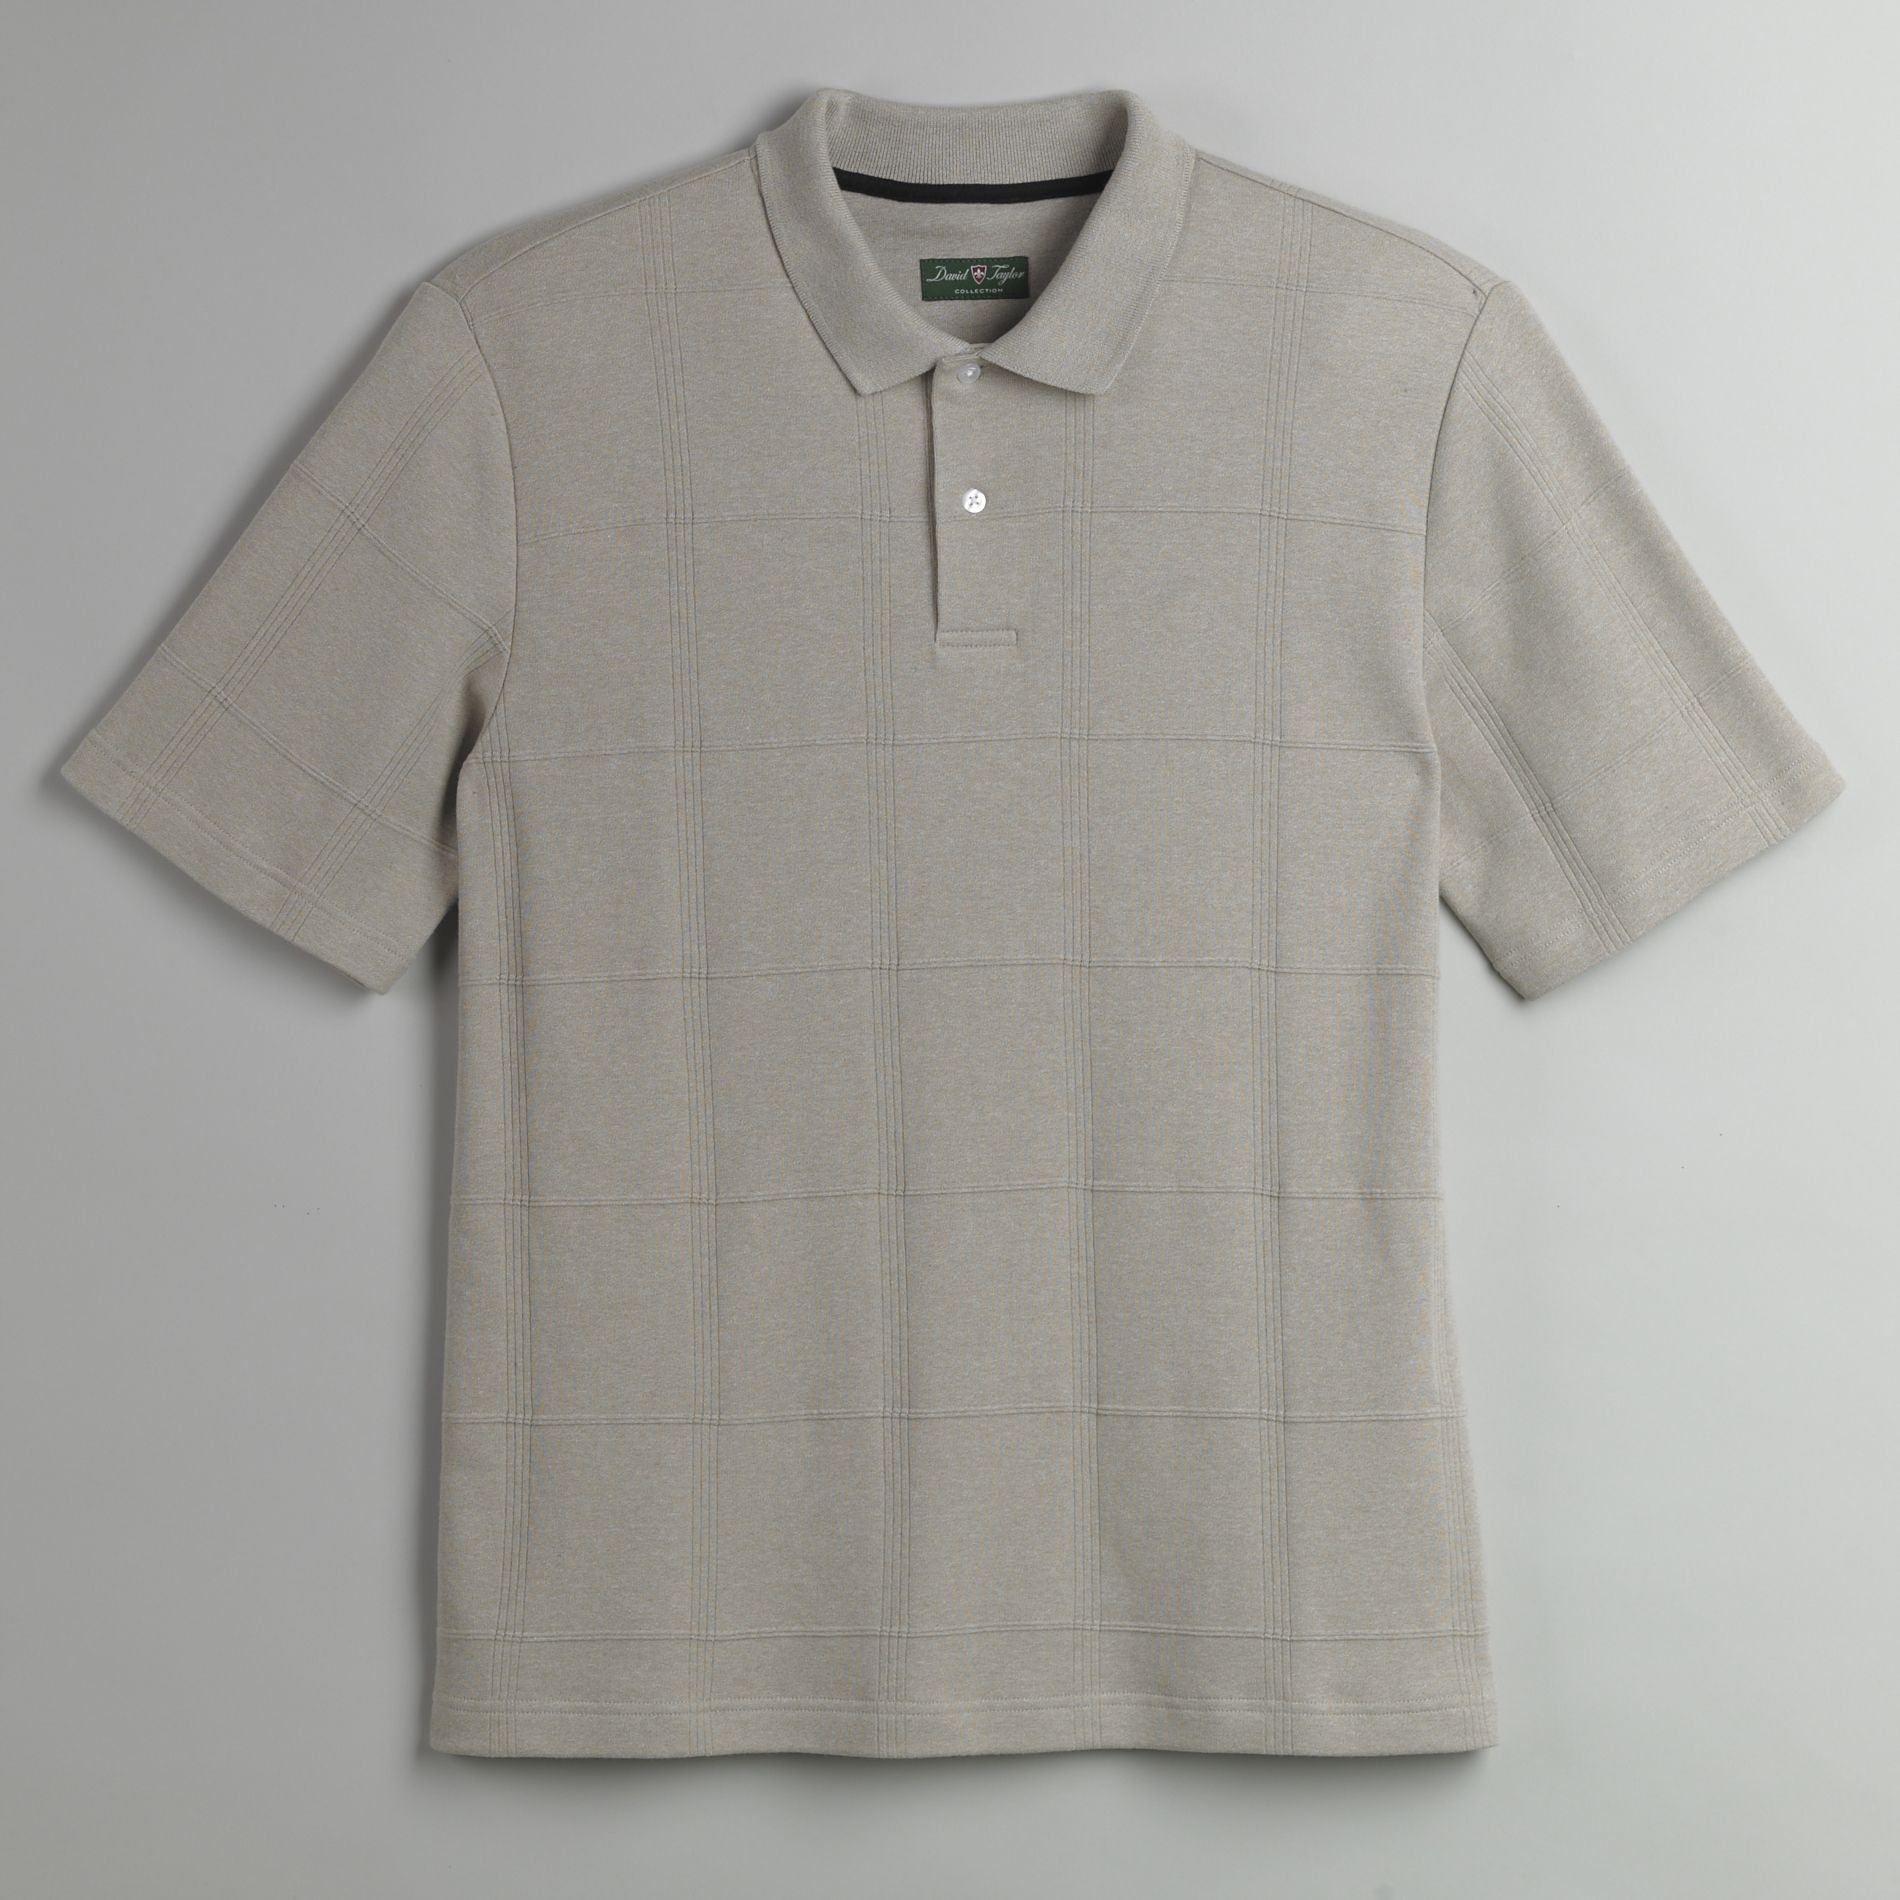 David Taylor Collection Men's Short Sleeve Drop Needle Rib Polo Shirt